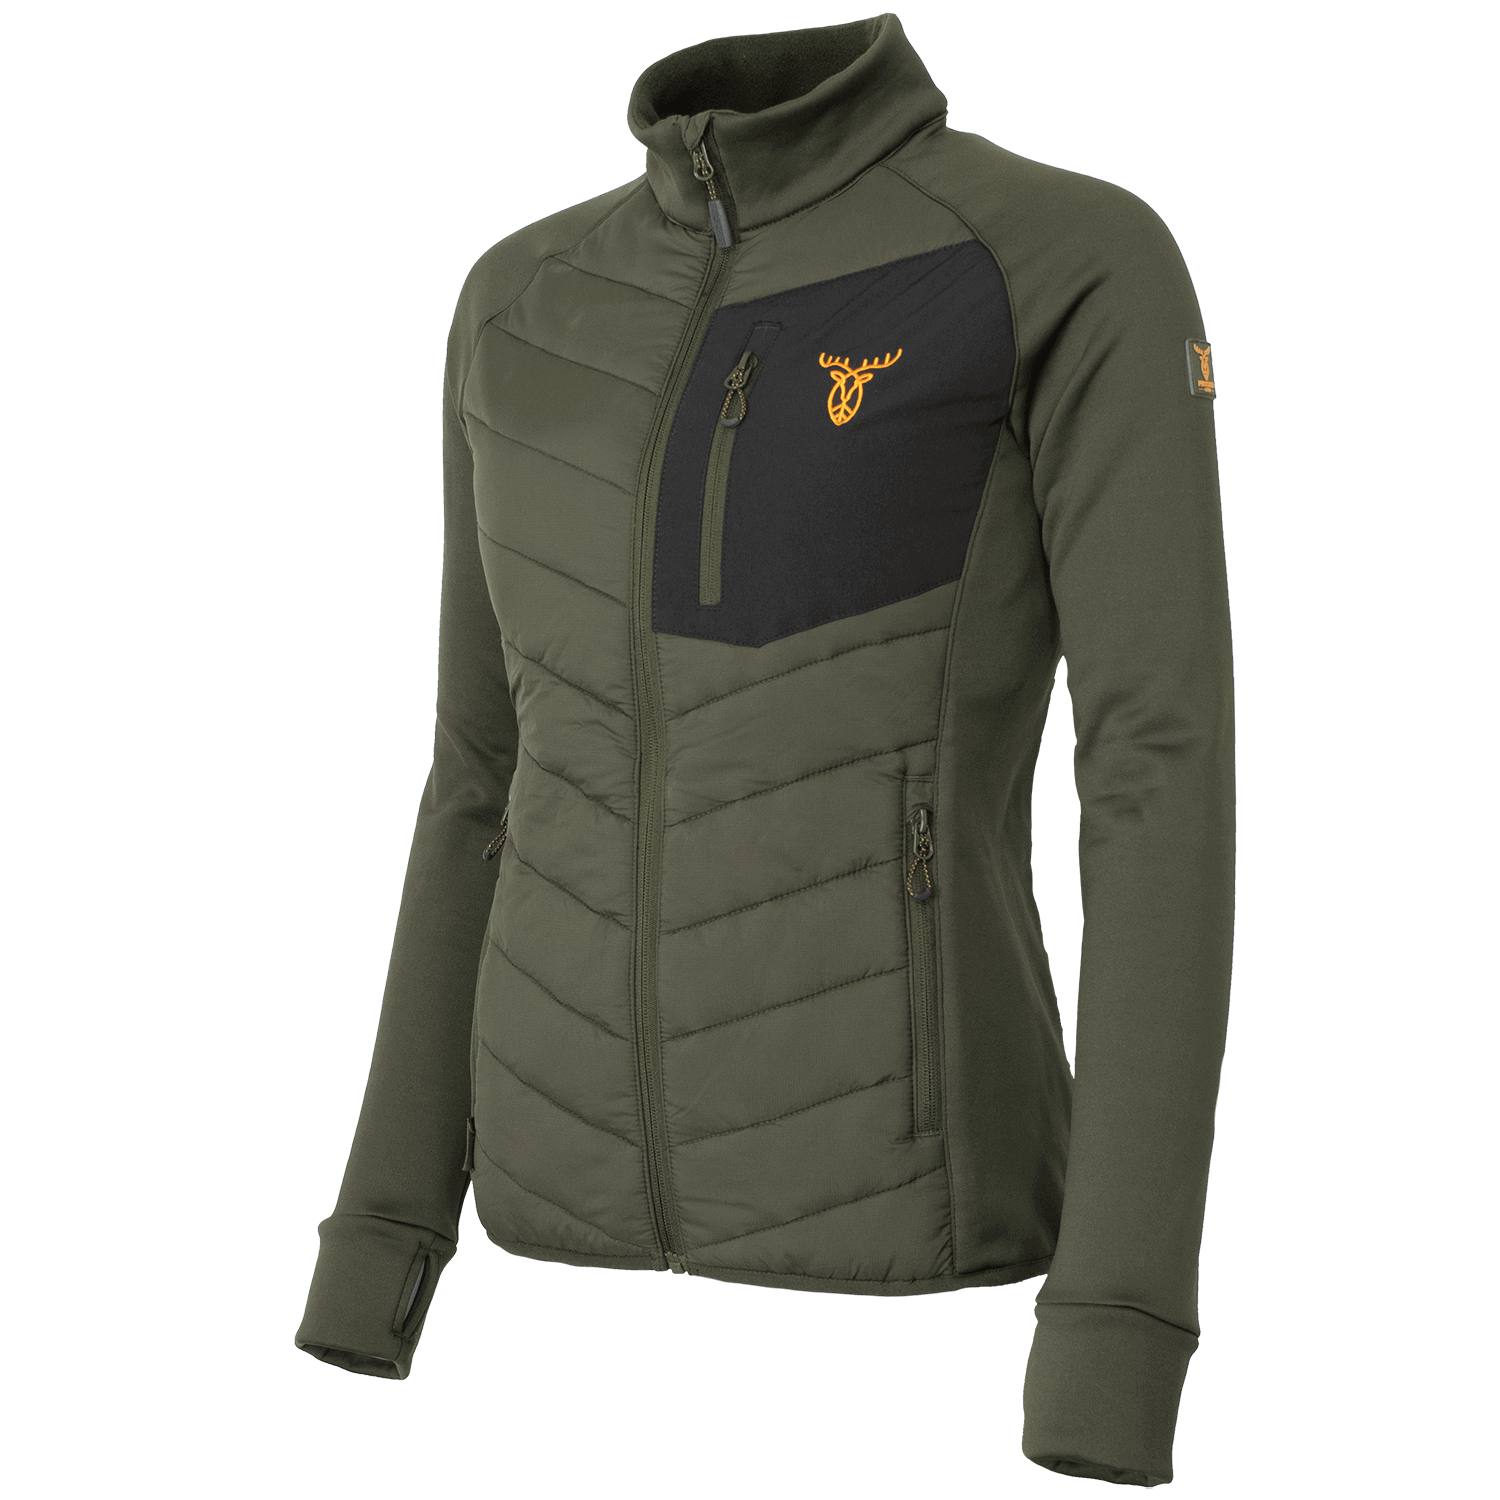 Pirscher Gear Hybrid Fleece Ladies Jacket - Women's Hunting Clothing 